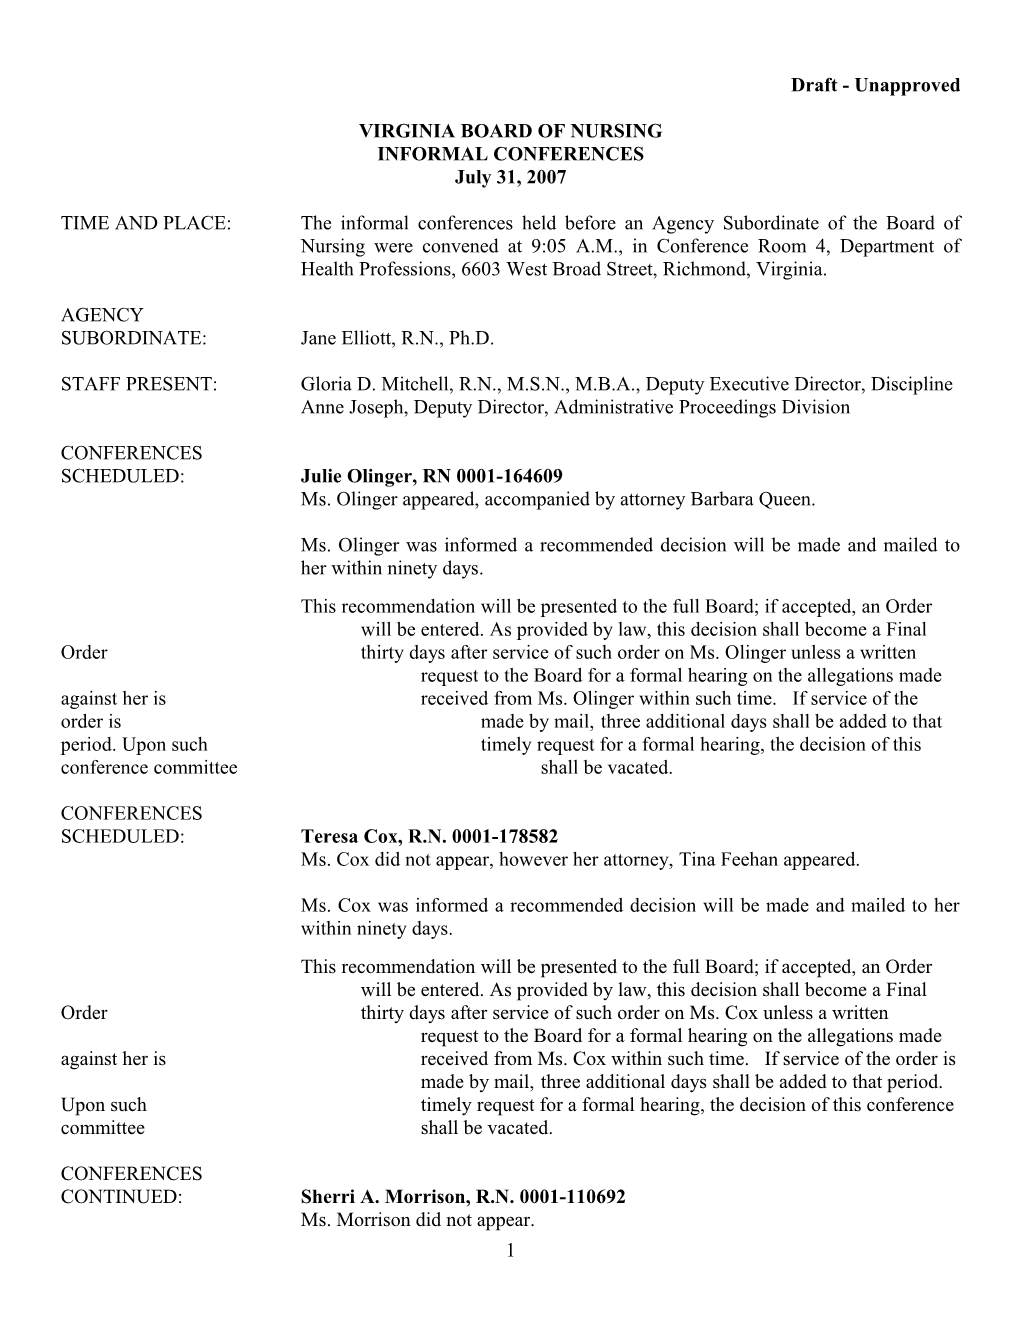 Nursing - Draft-Unapproved Minutes of Informal Conferences Held July 31, 2007